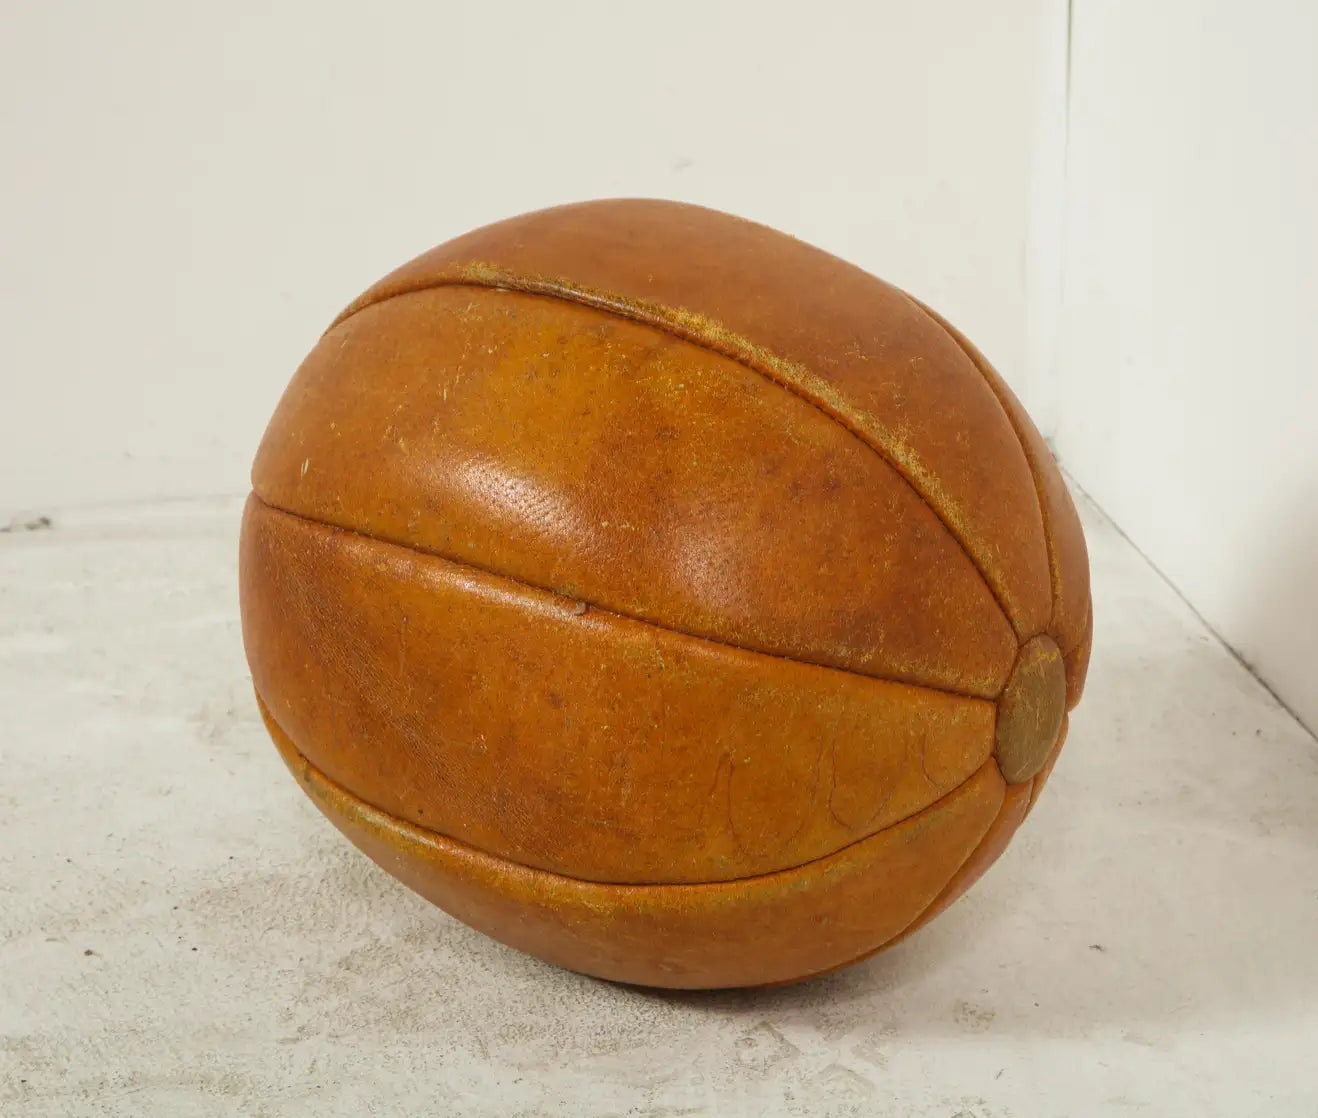 19th Century English Leather Ball